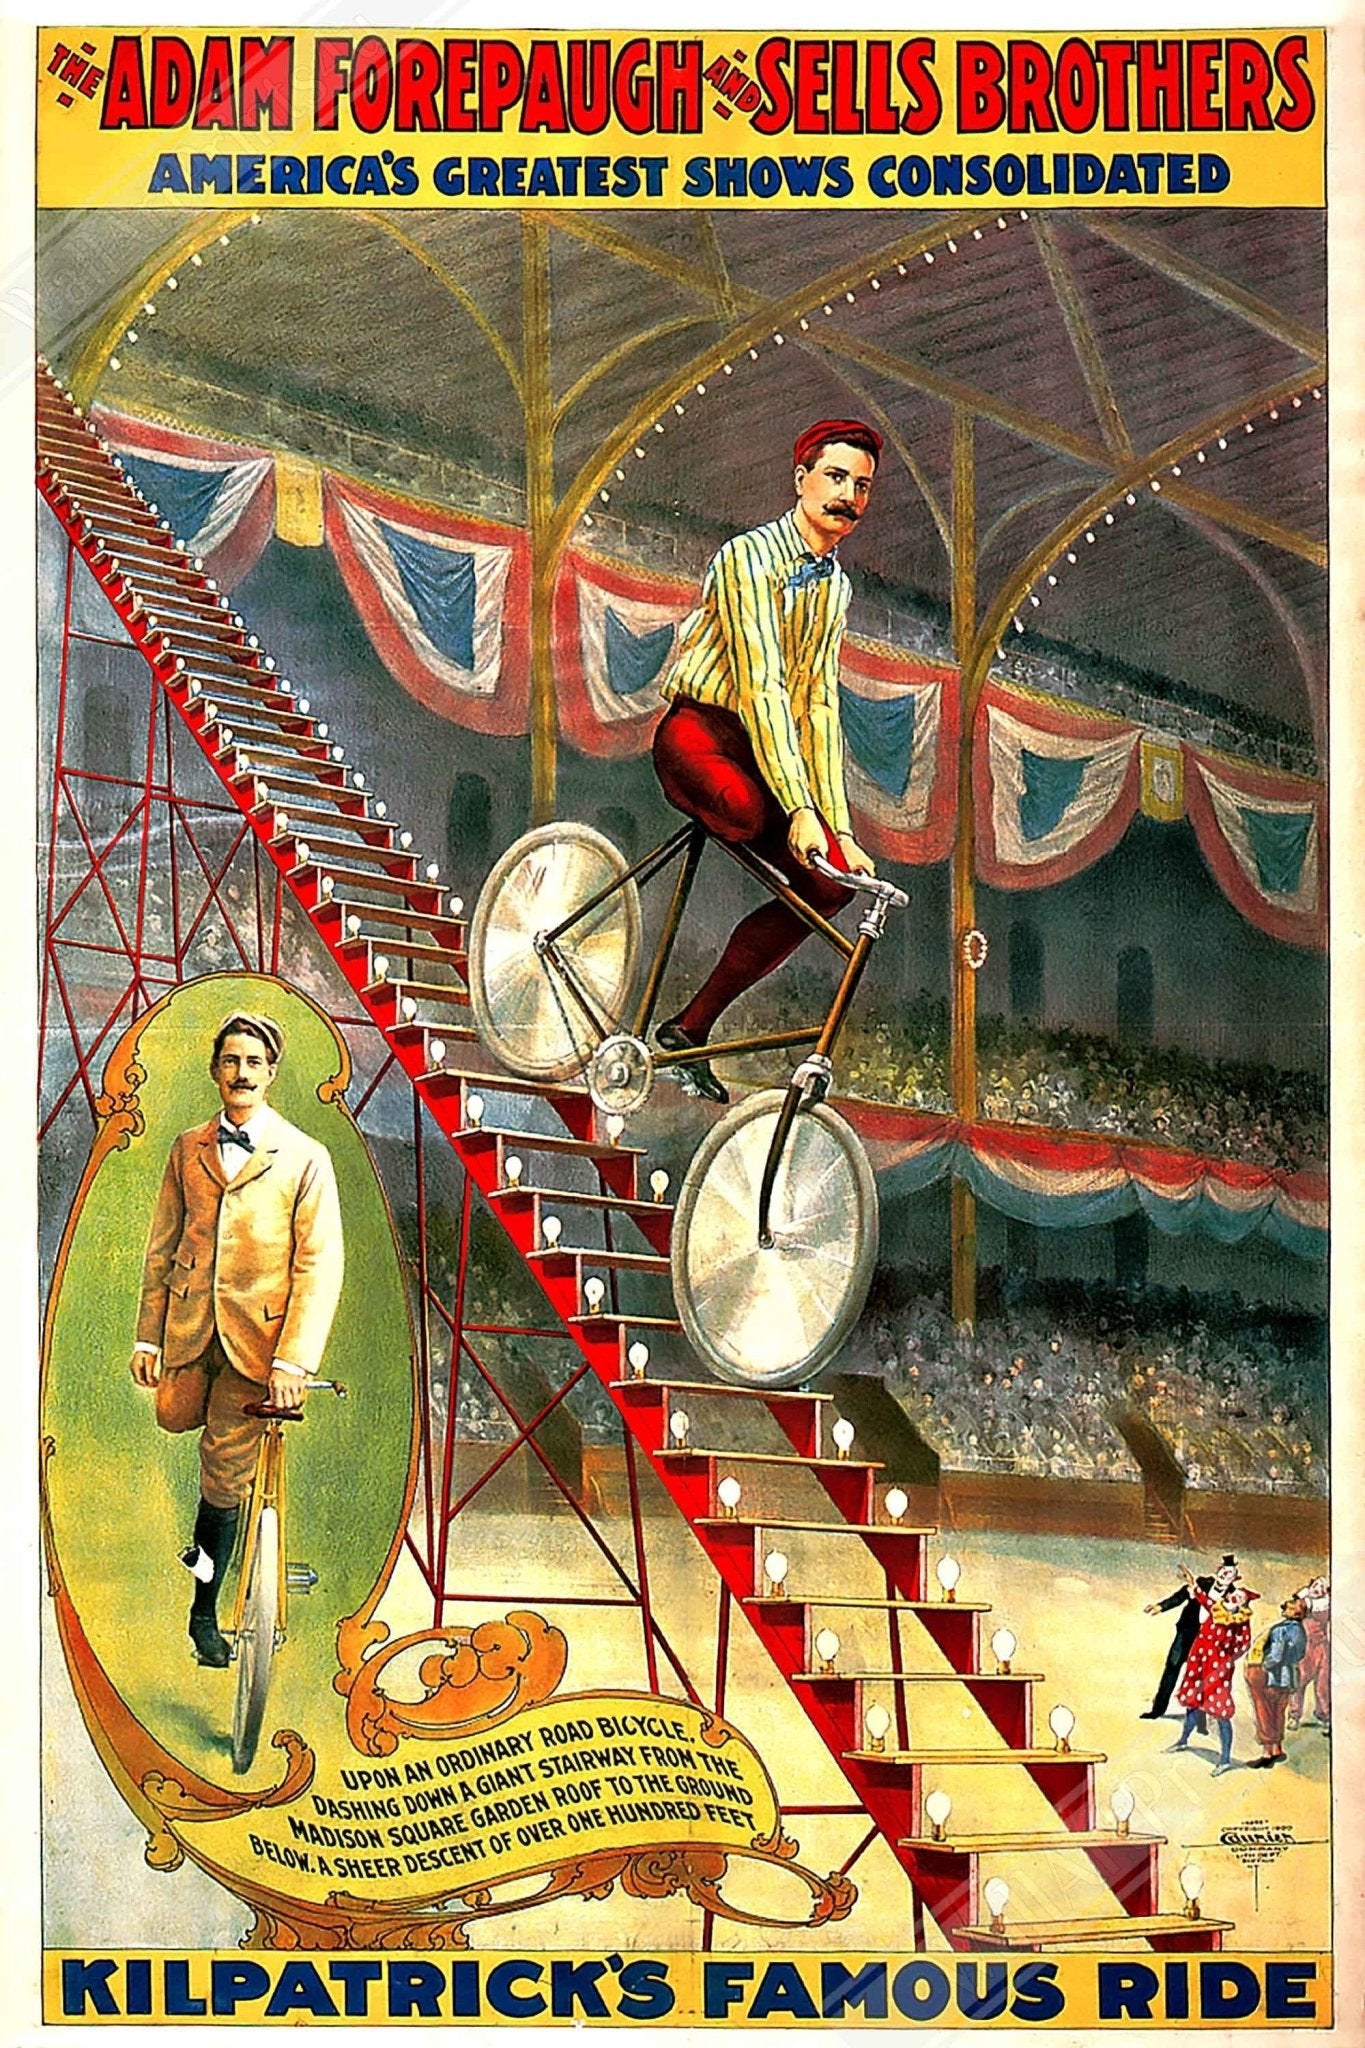 Vintage Circus Framed, Kilpatricks Cycle Ride, Sells Brothers, Americas Greatest Shows Circa 1900. - WallArtPrints4U